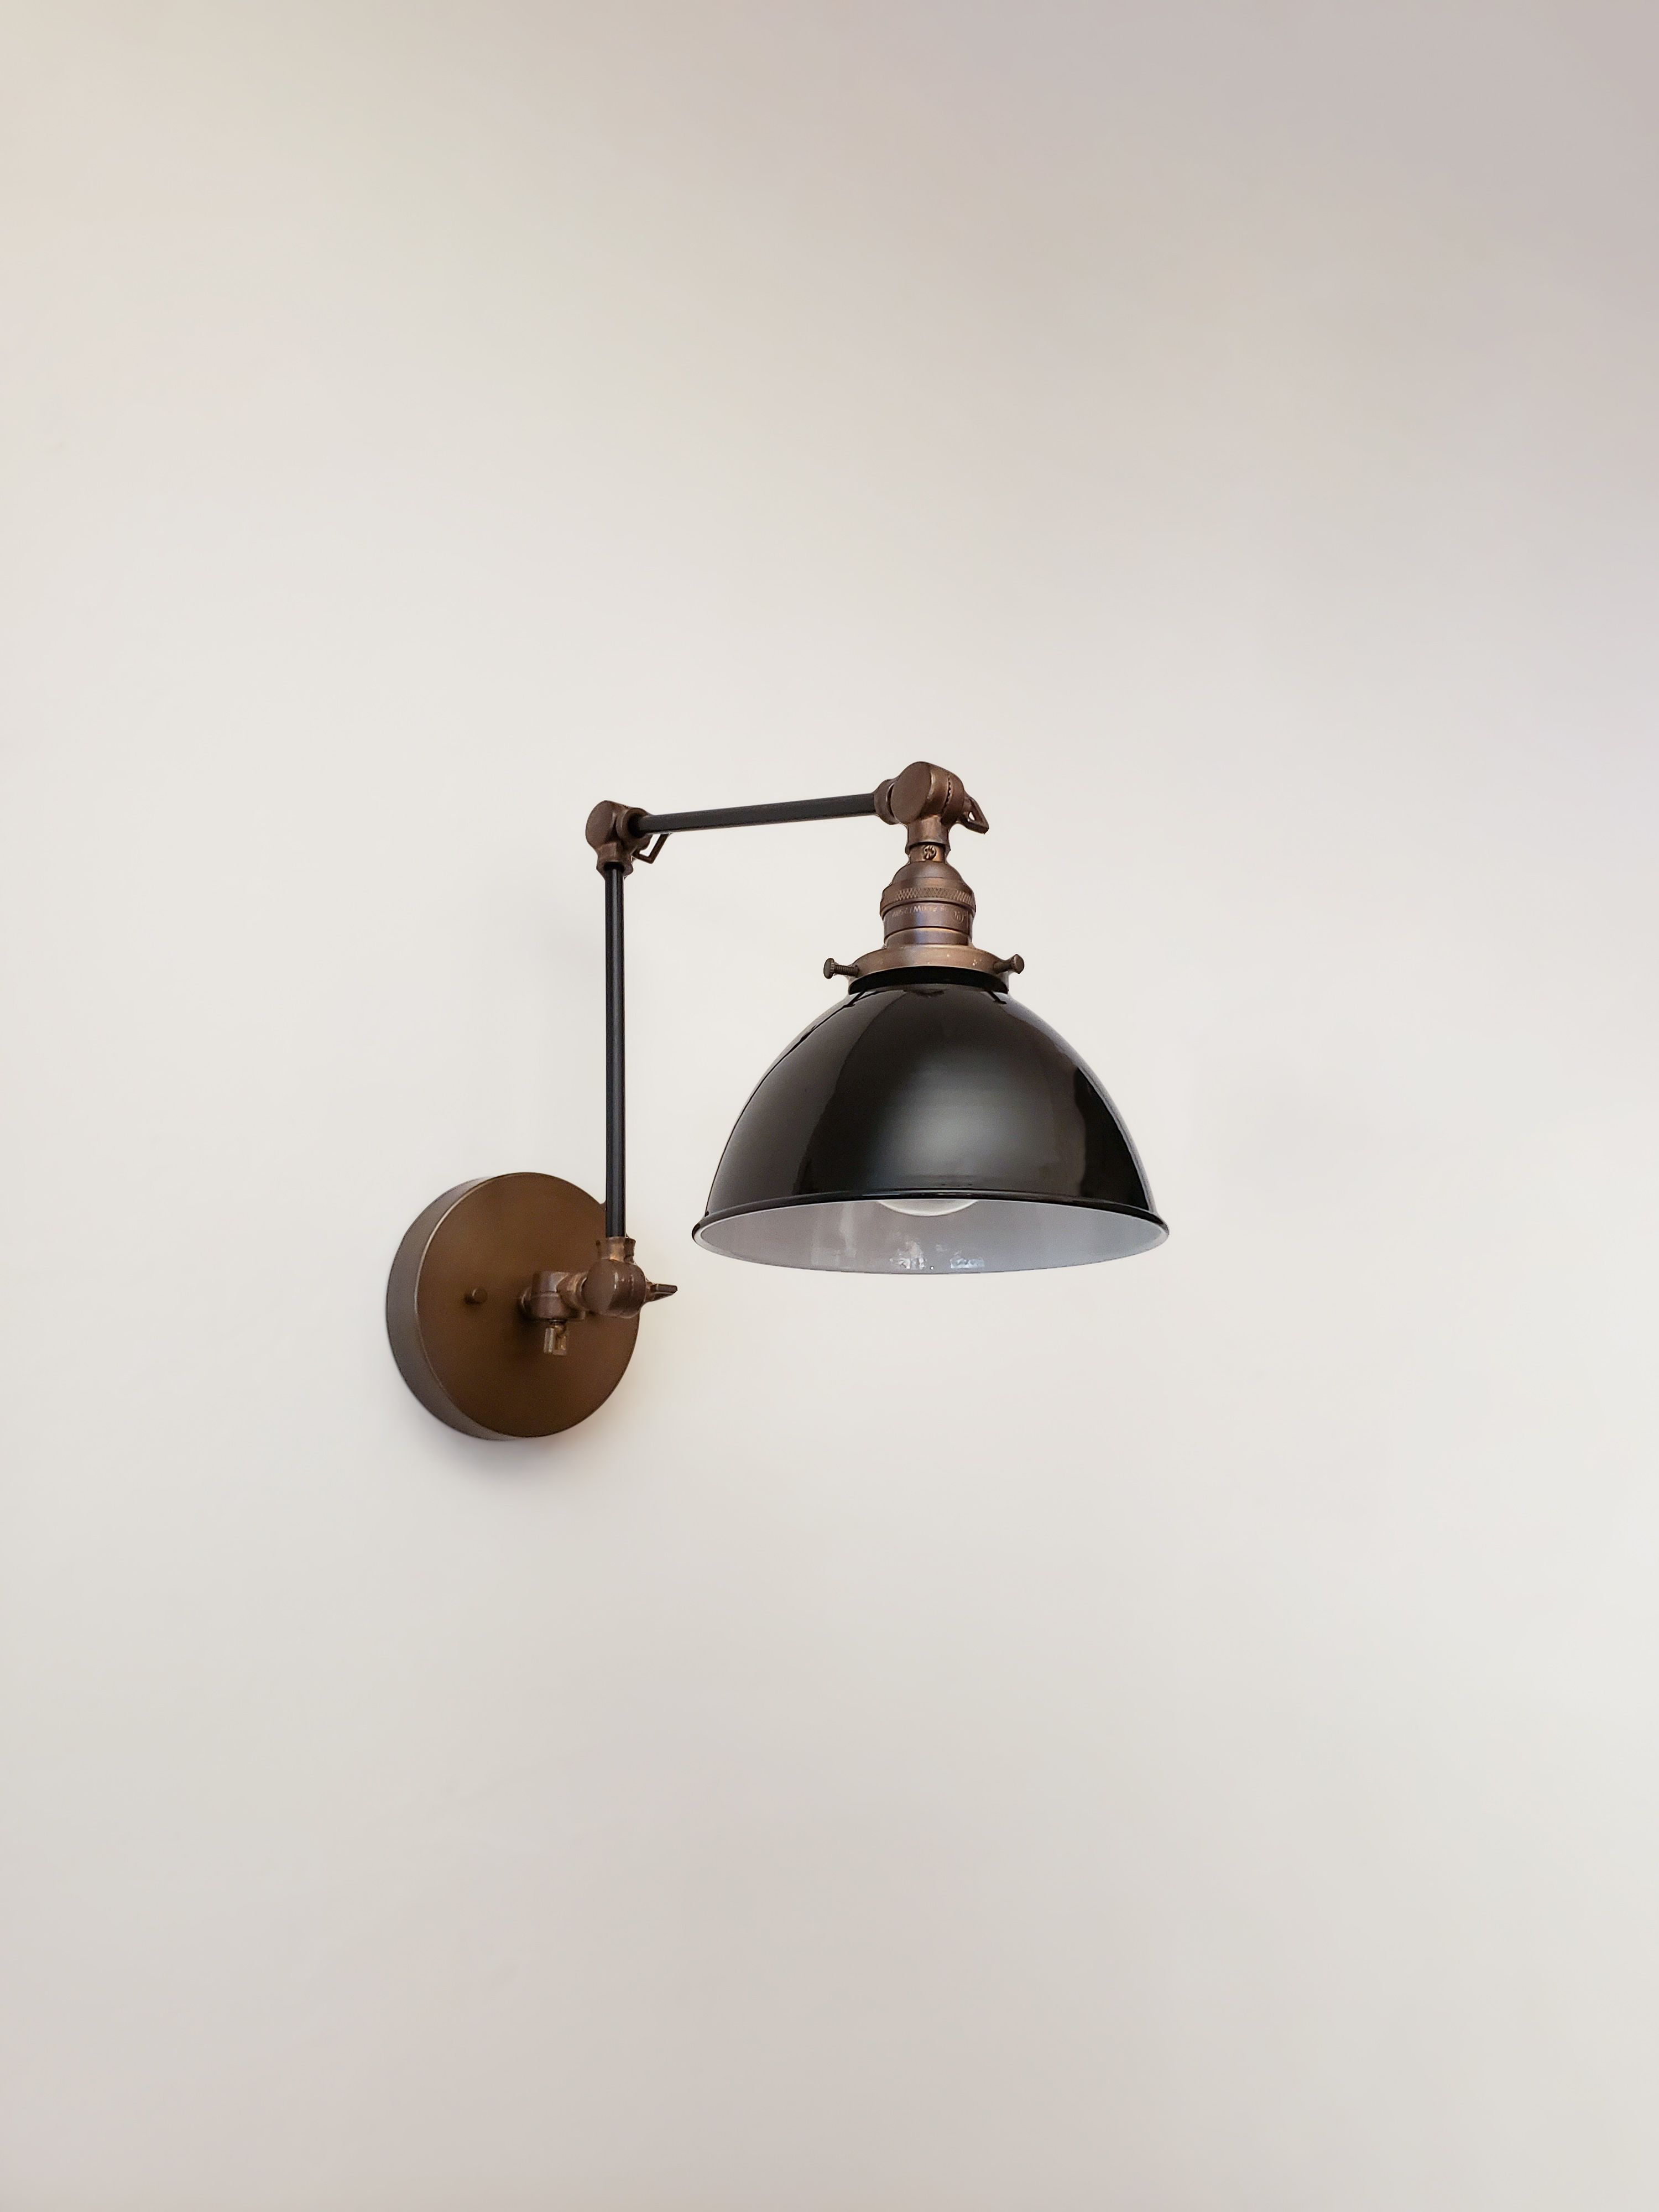 Vintage Industrial Adjustable Arm Light Wall Sconce Retro Lighting Office Studio 